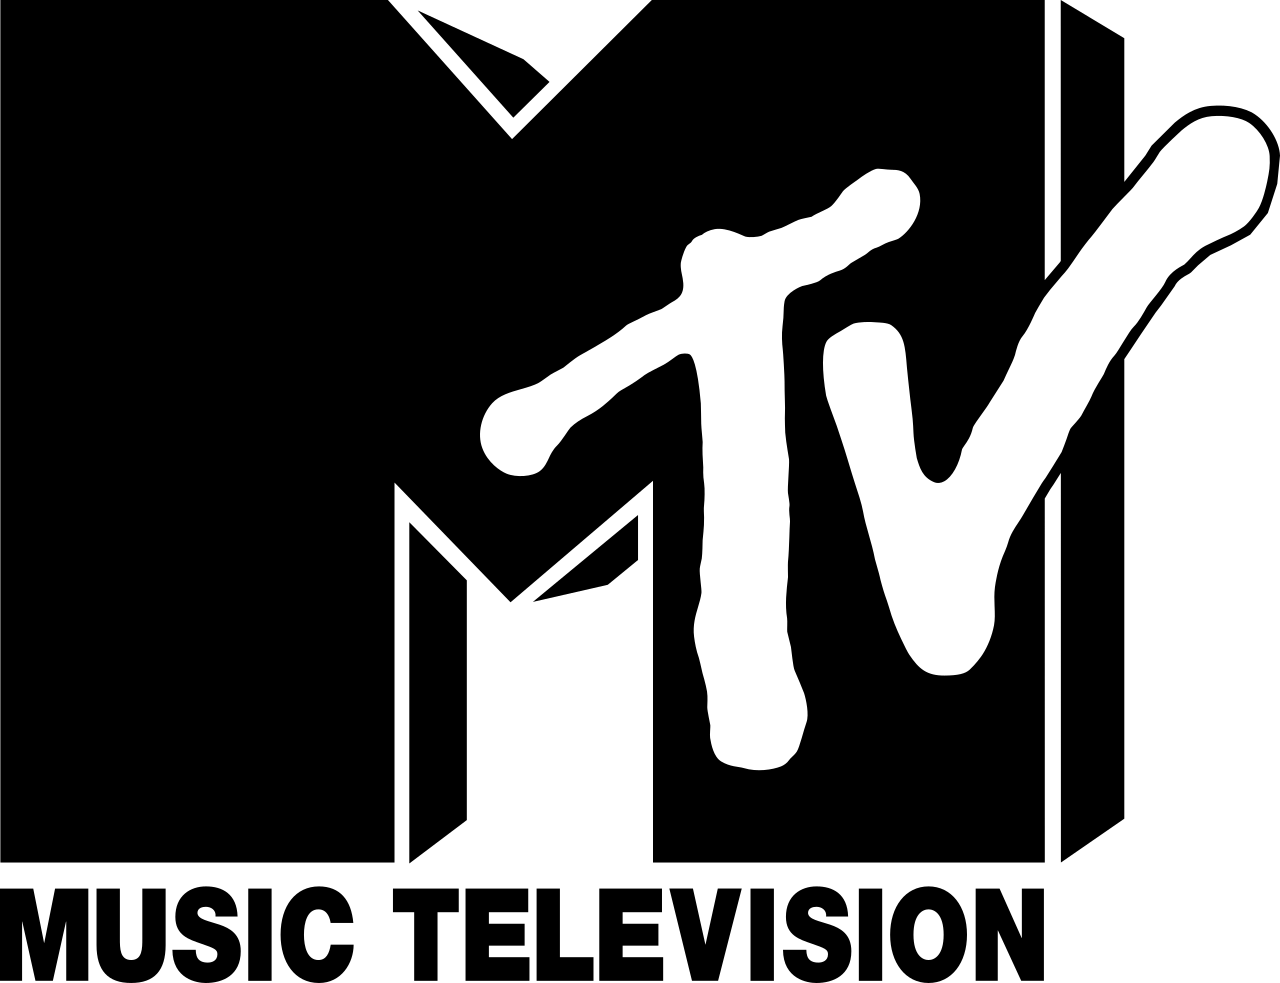 mtv-movie-png-logo-5.png